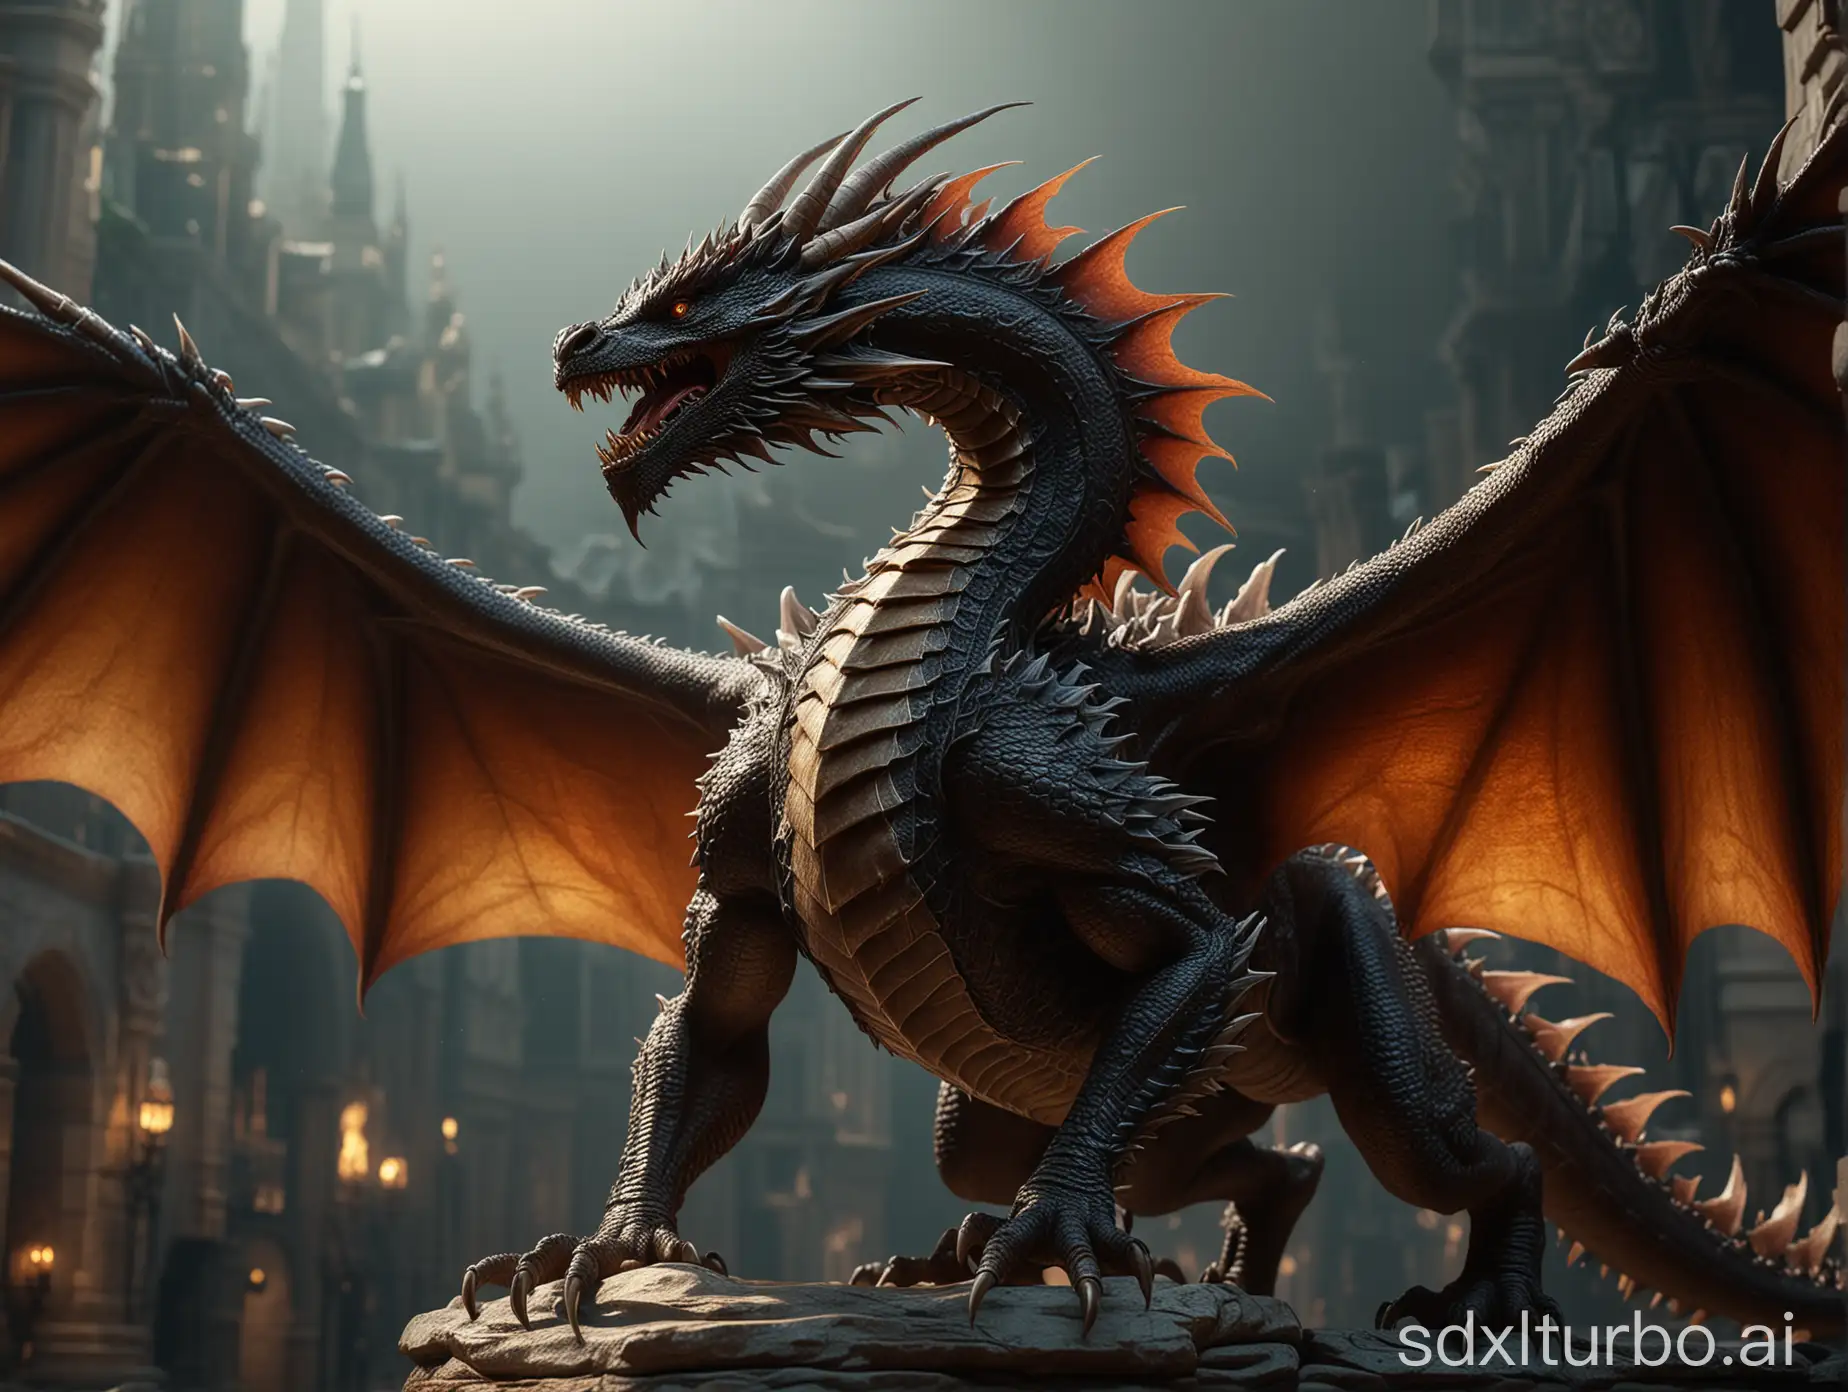 Majestic-Dragon-Soars-in-Photorealistic-8K-Render-Cinematic-Masterpiece-Art